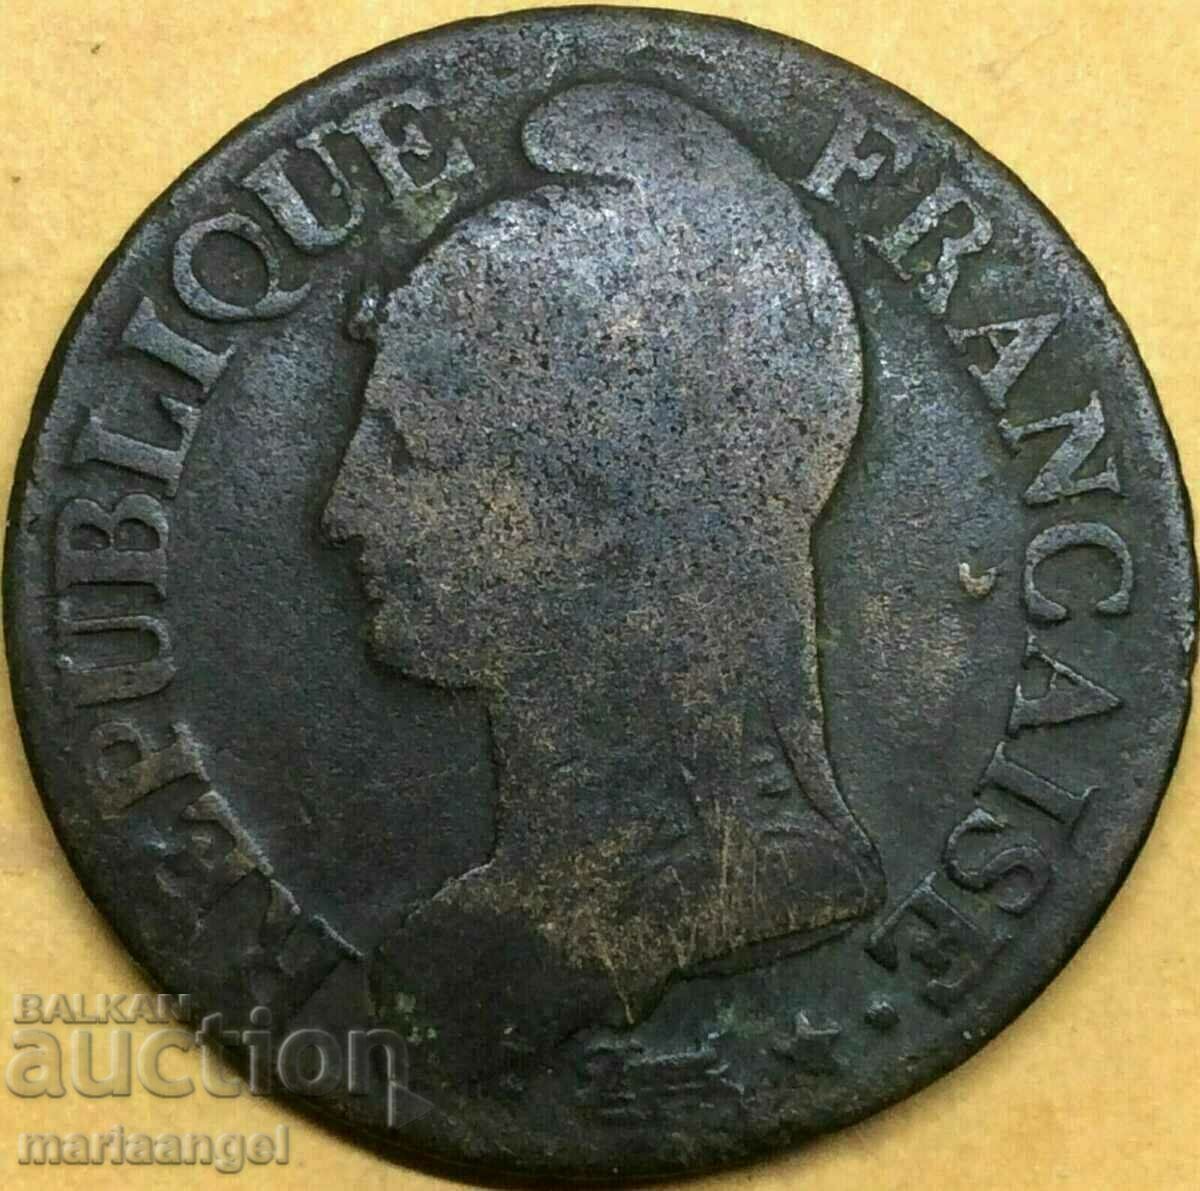 France 5 centimes 1796 Lan 5 BI - quite rare